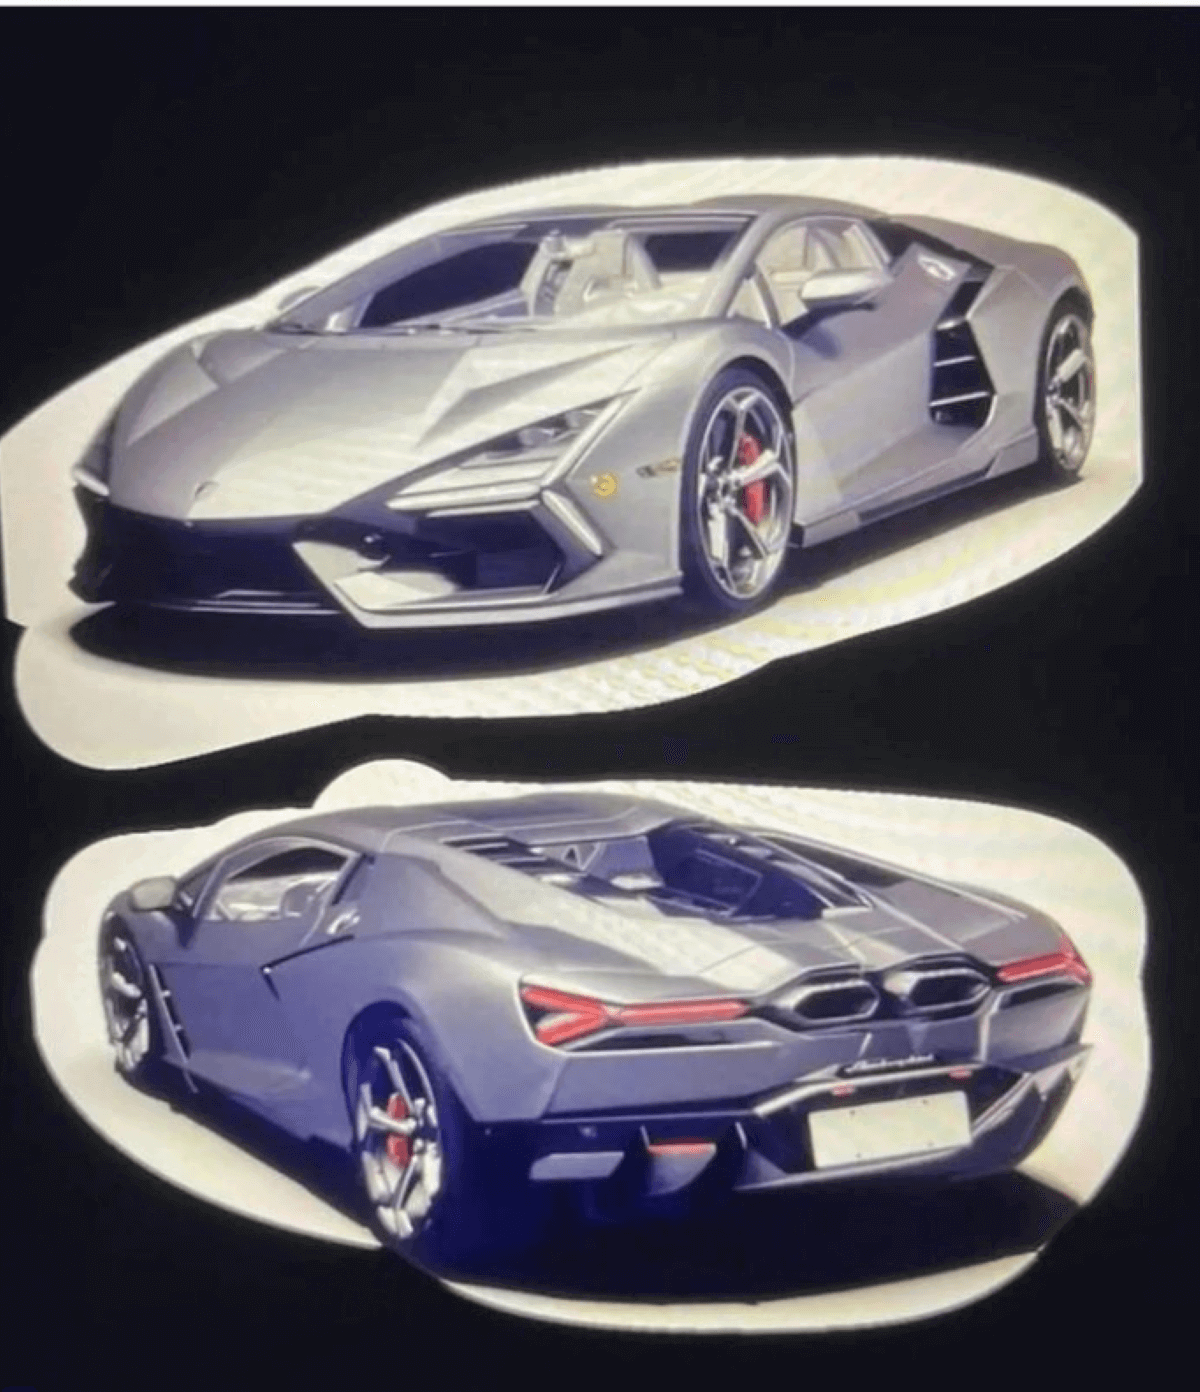 The new Lamborghini Aventador replacement